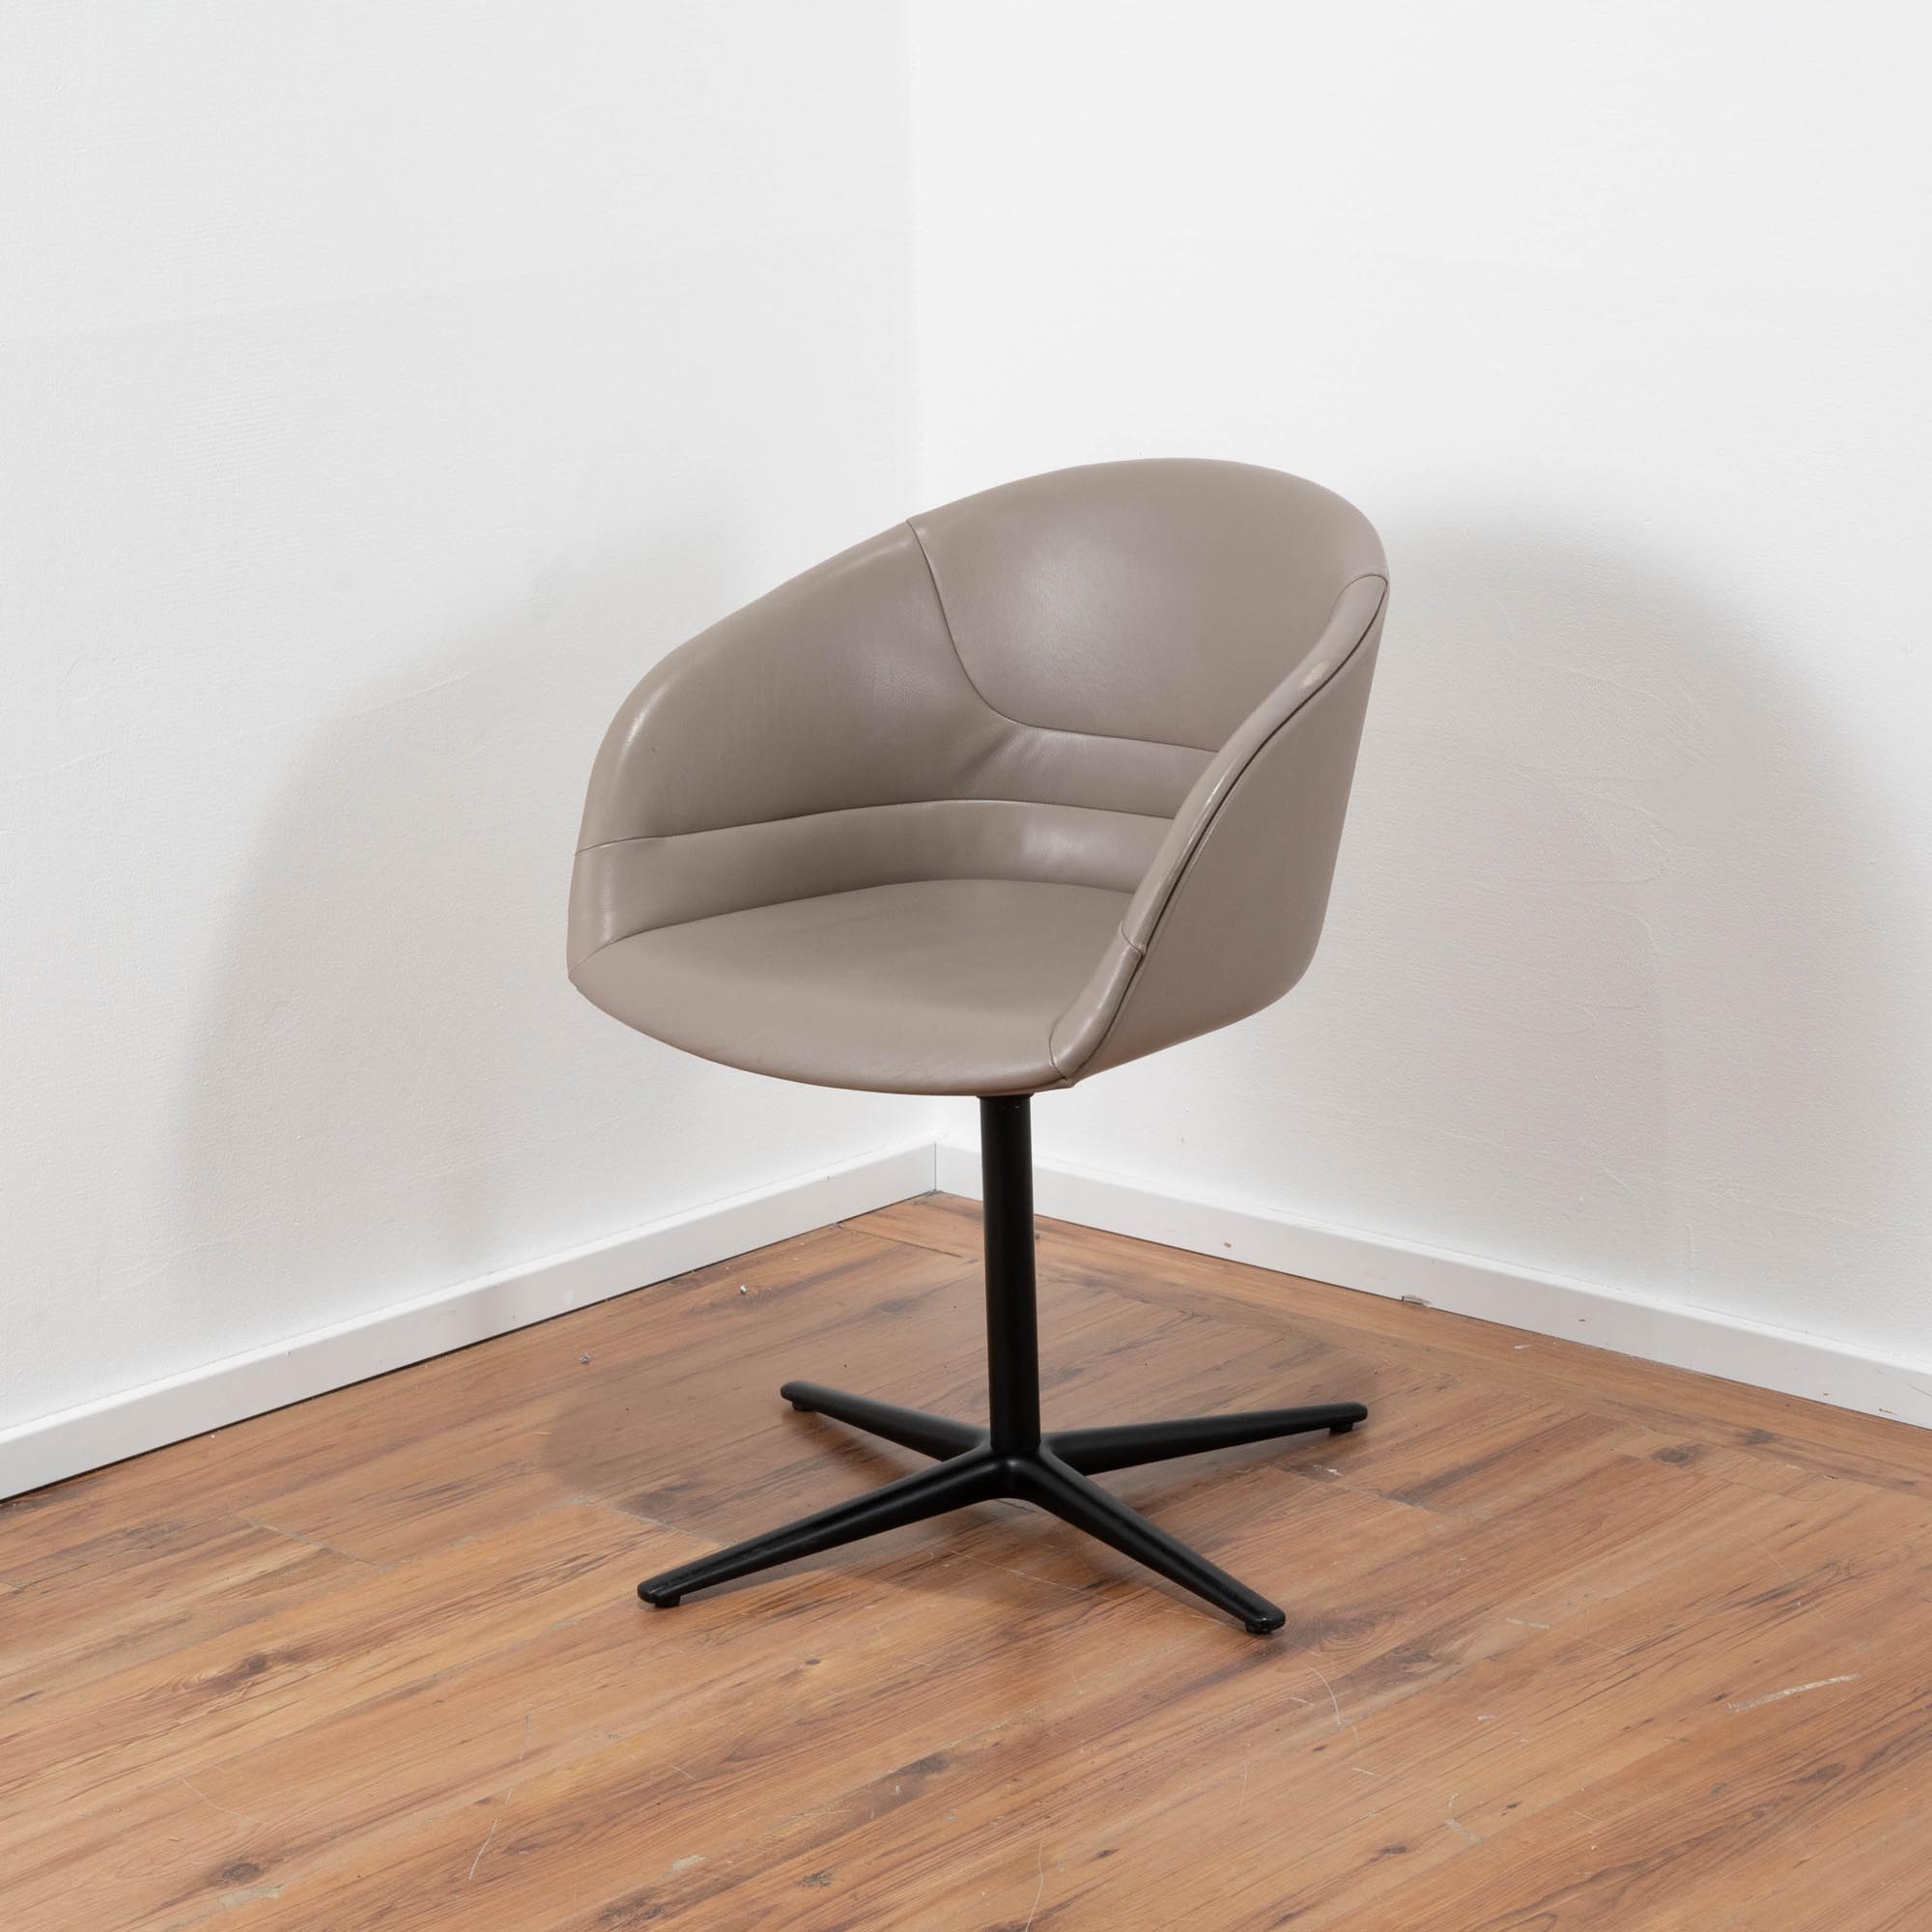 Walter Knoll "Kyo Chair" Besucherstuhl - Sitzschale Leder beige - 4-Fuß Gestell Metall schwarz